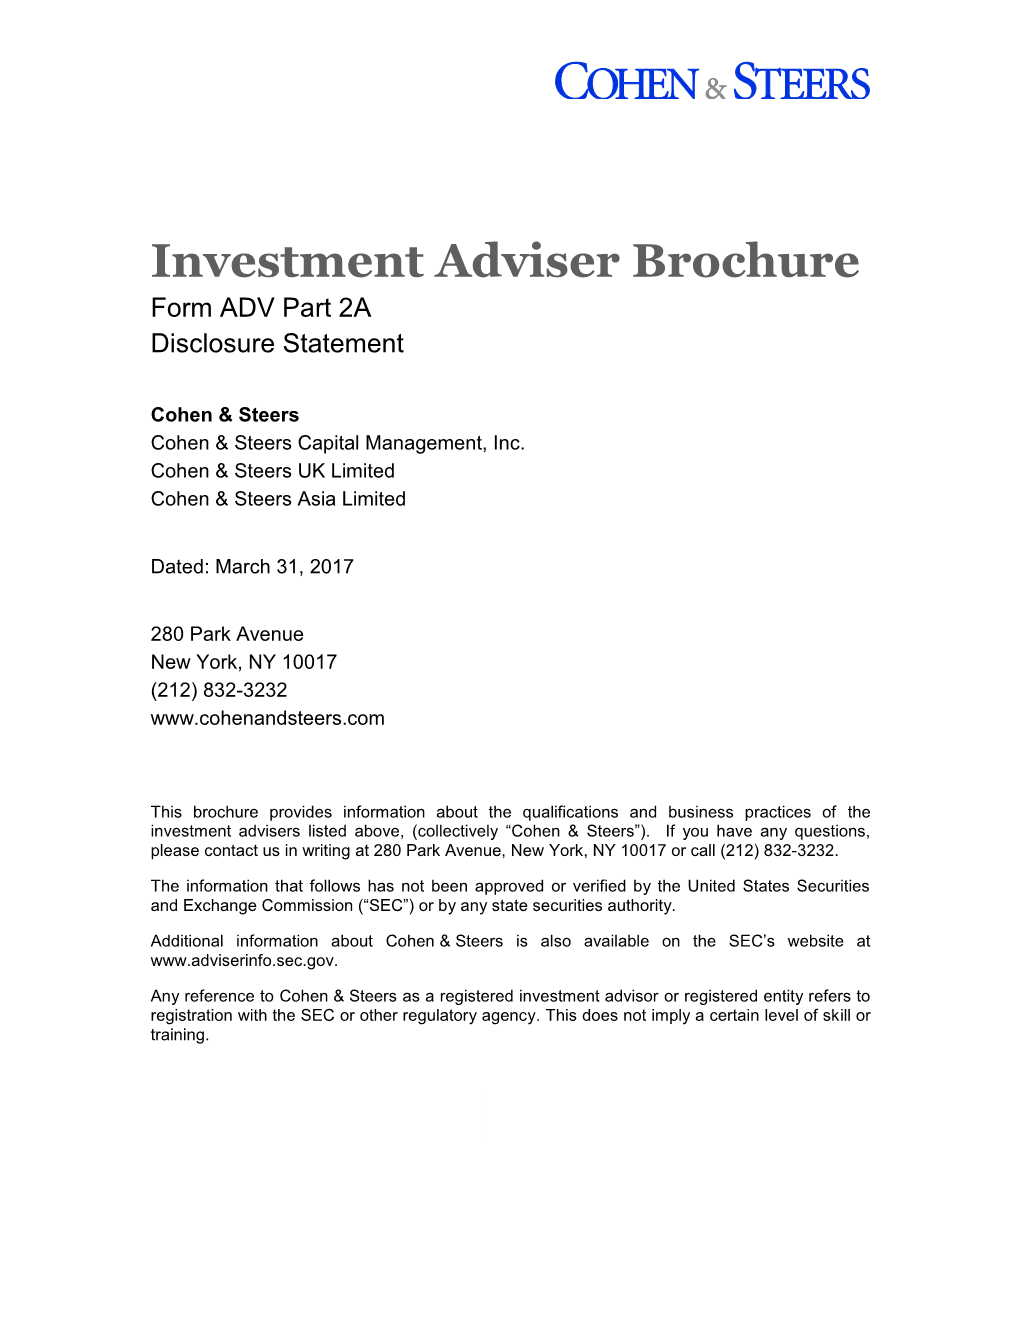 Investment Adviser Brochure Form ADV Part 2A Disclosure Statement